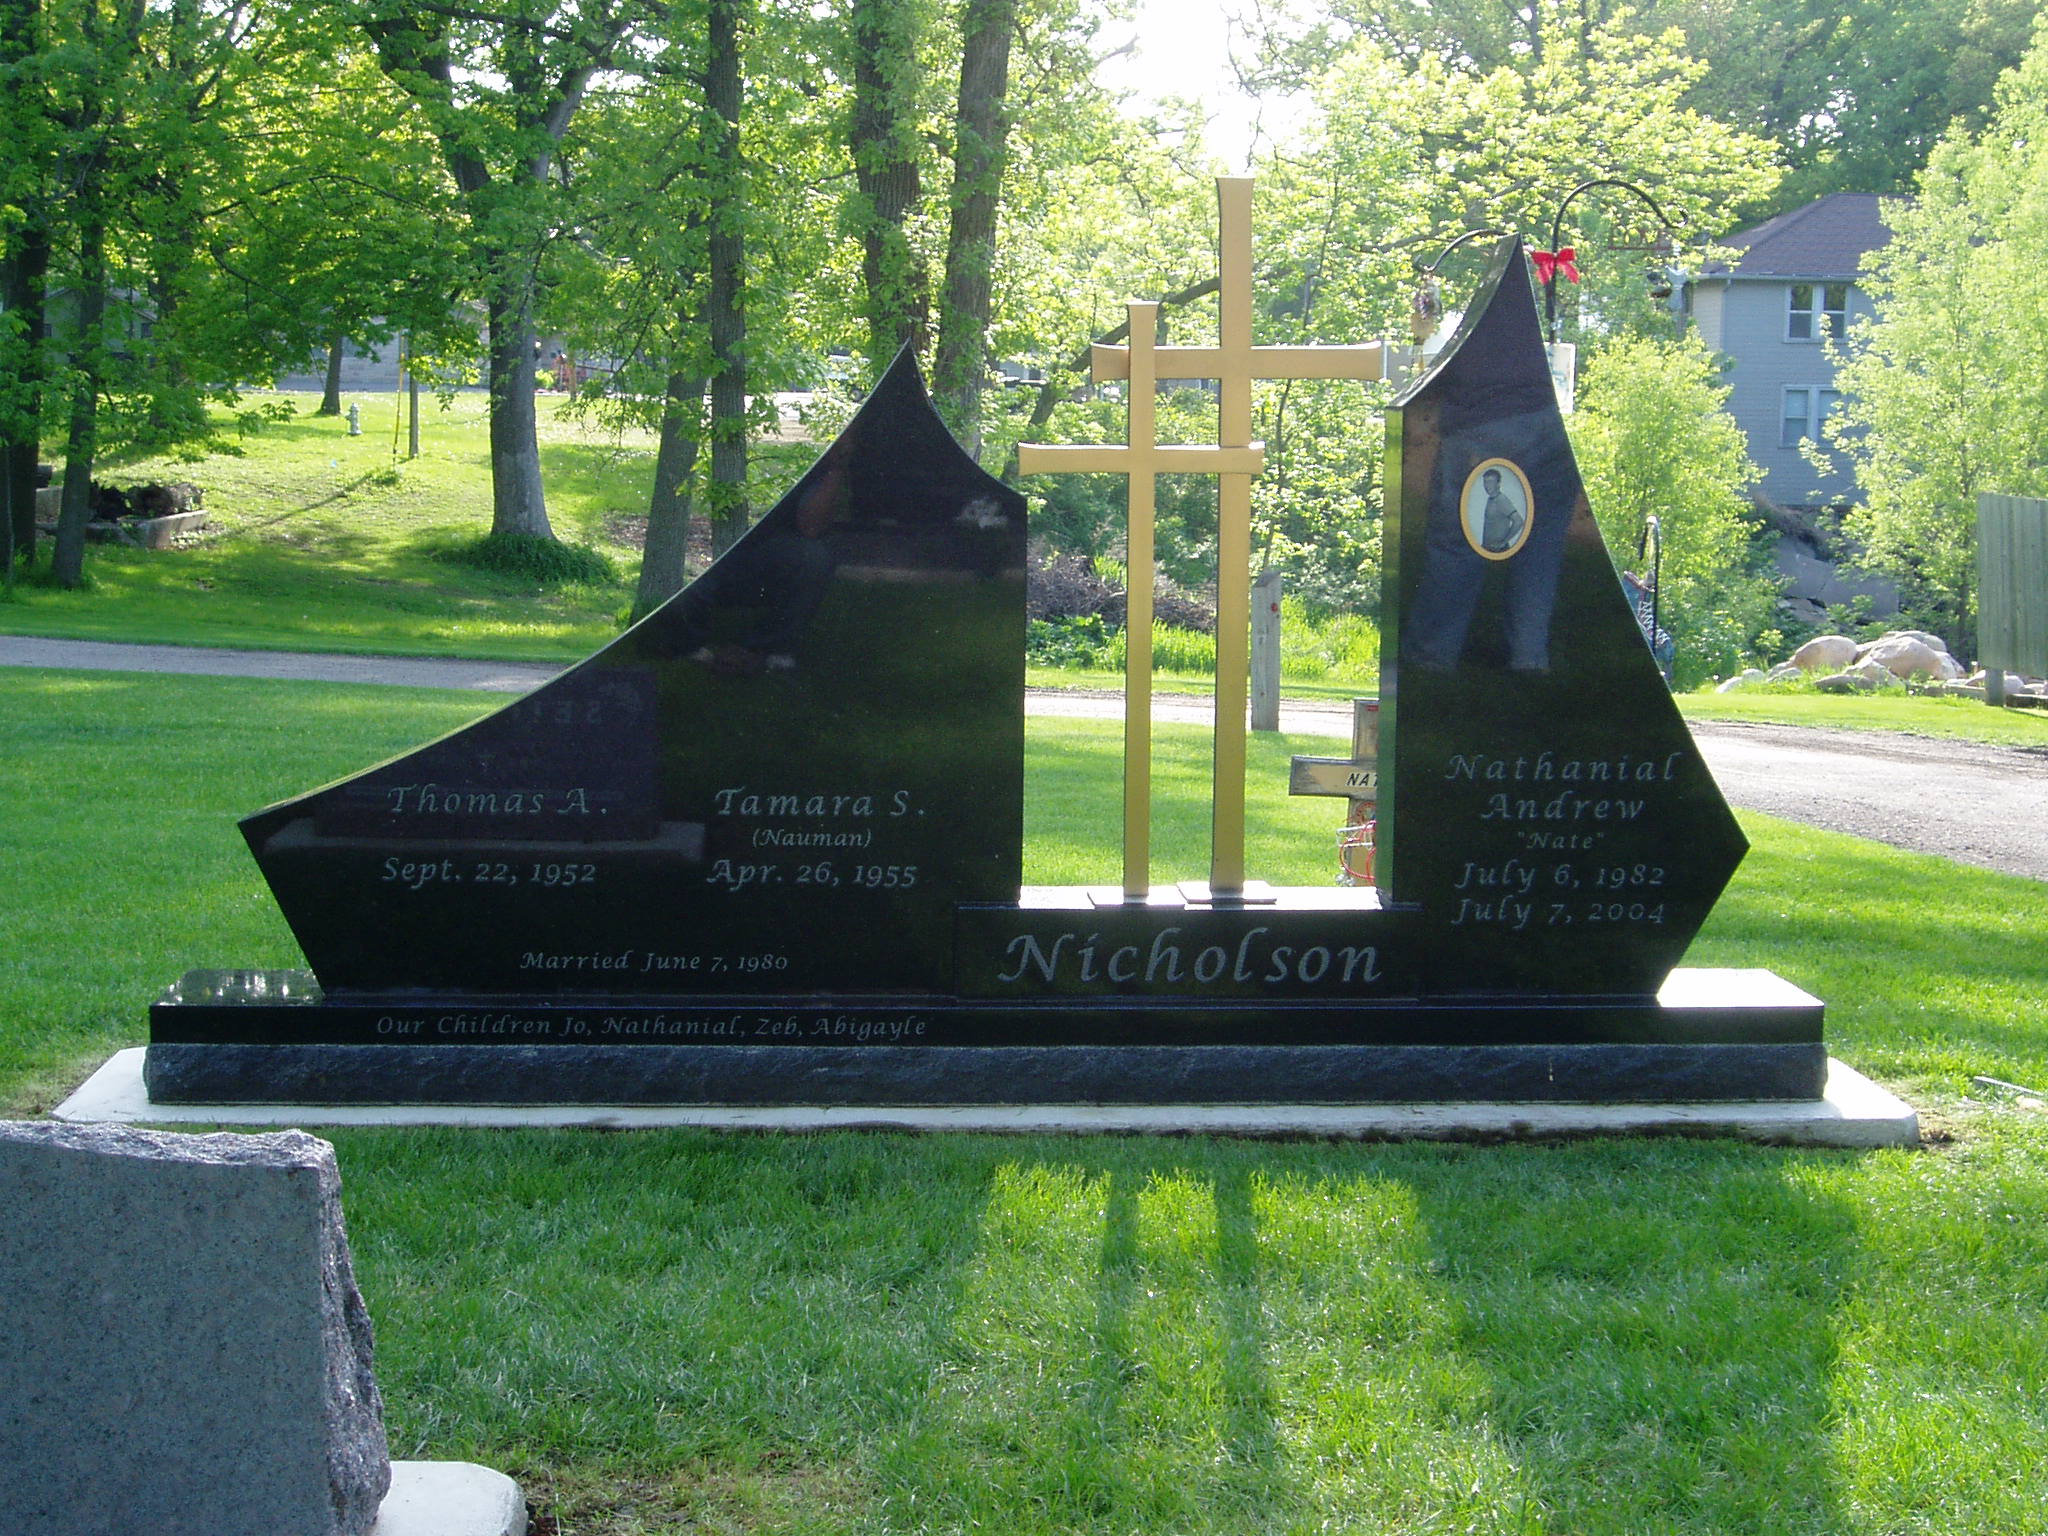 Upright cross memorial